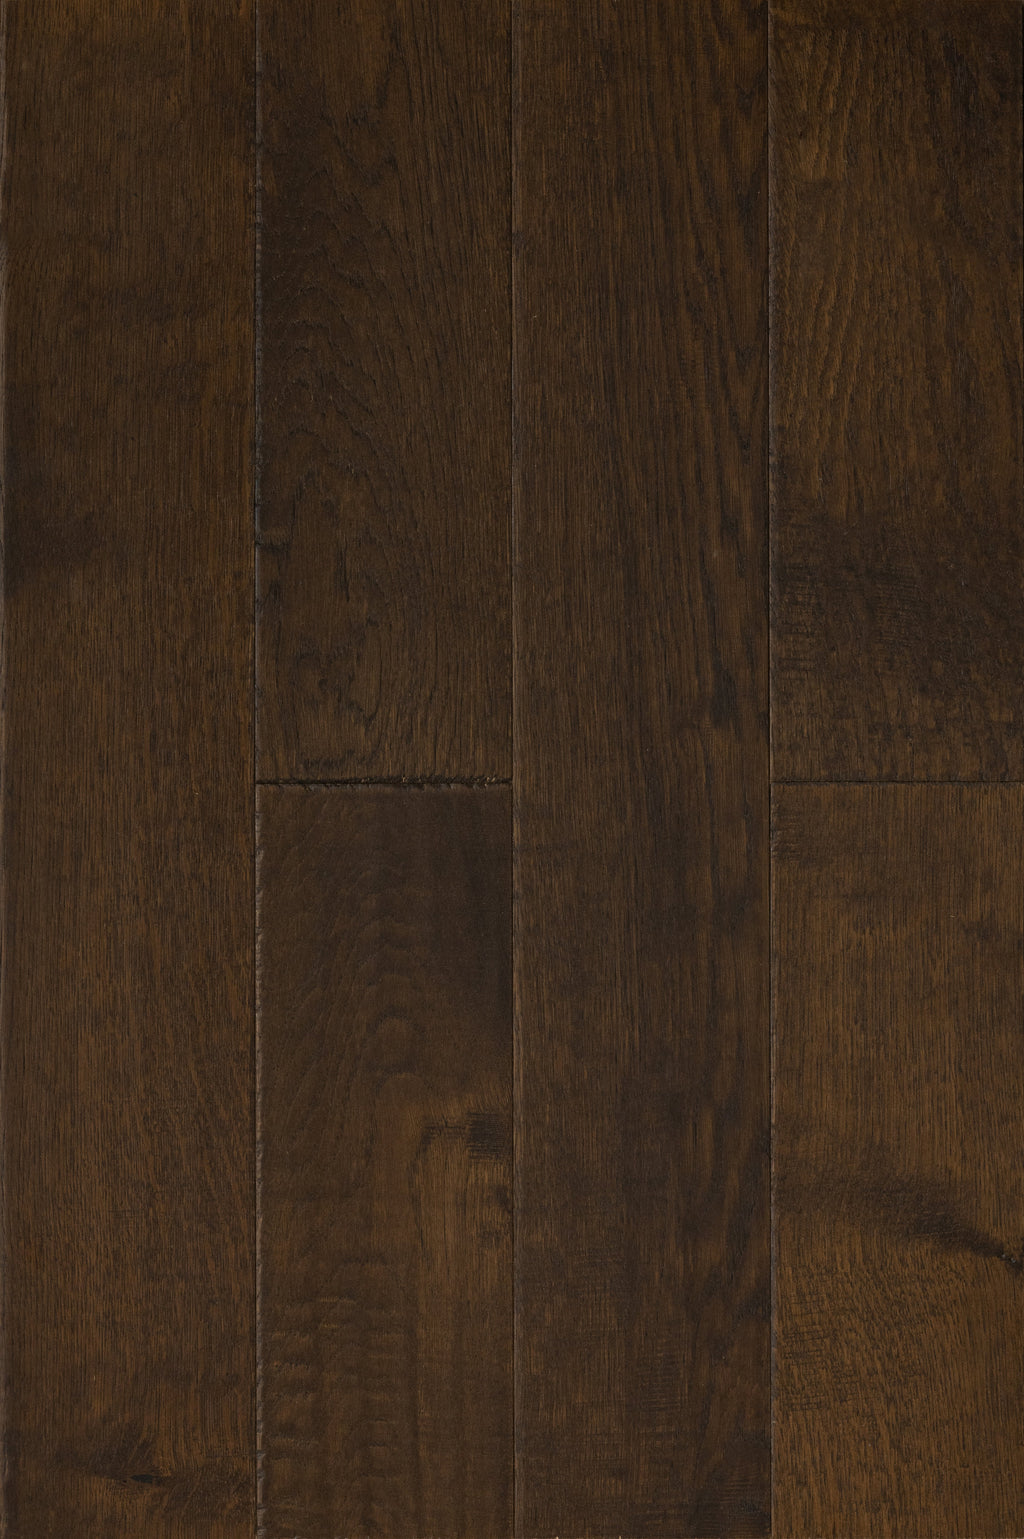 East West Furniture SP-5OH01 Sango Premier Engineered Hardwood Floor - European Oak - 1/2 in x 7 in x Random Length Handscraped, 26.24 sqft/box, Chestnut